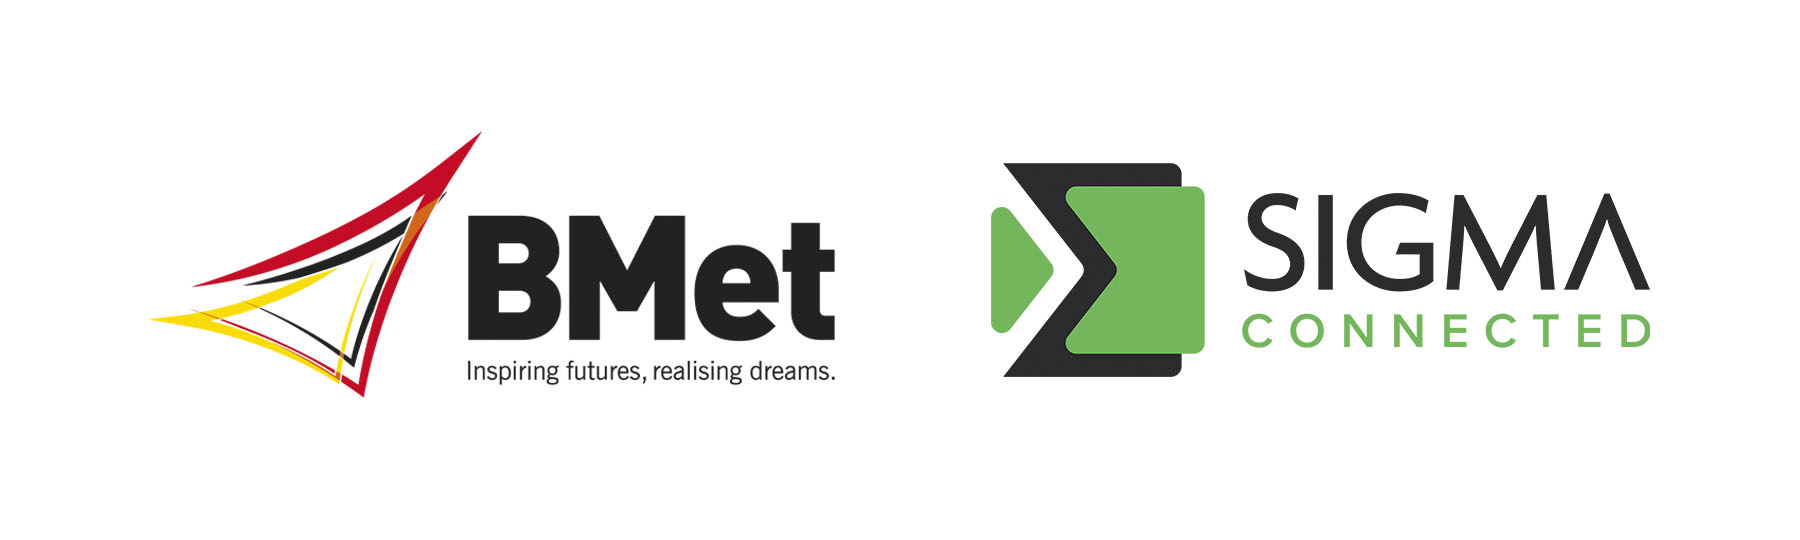 BMet & Sigma Connect Partnership